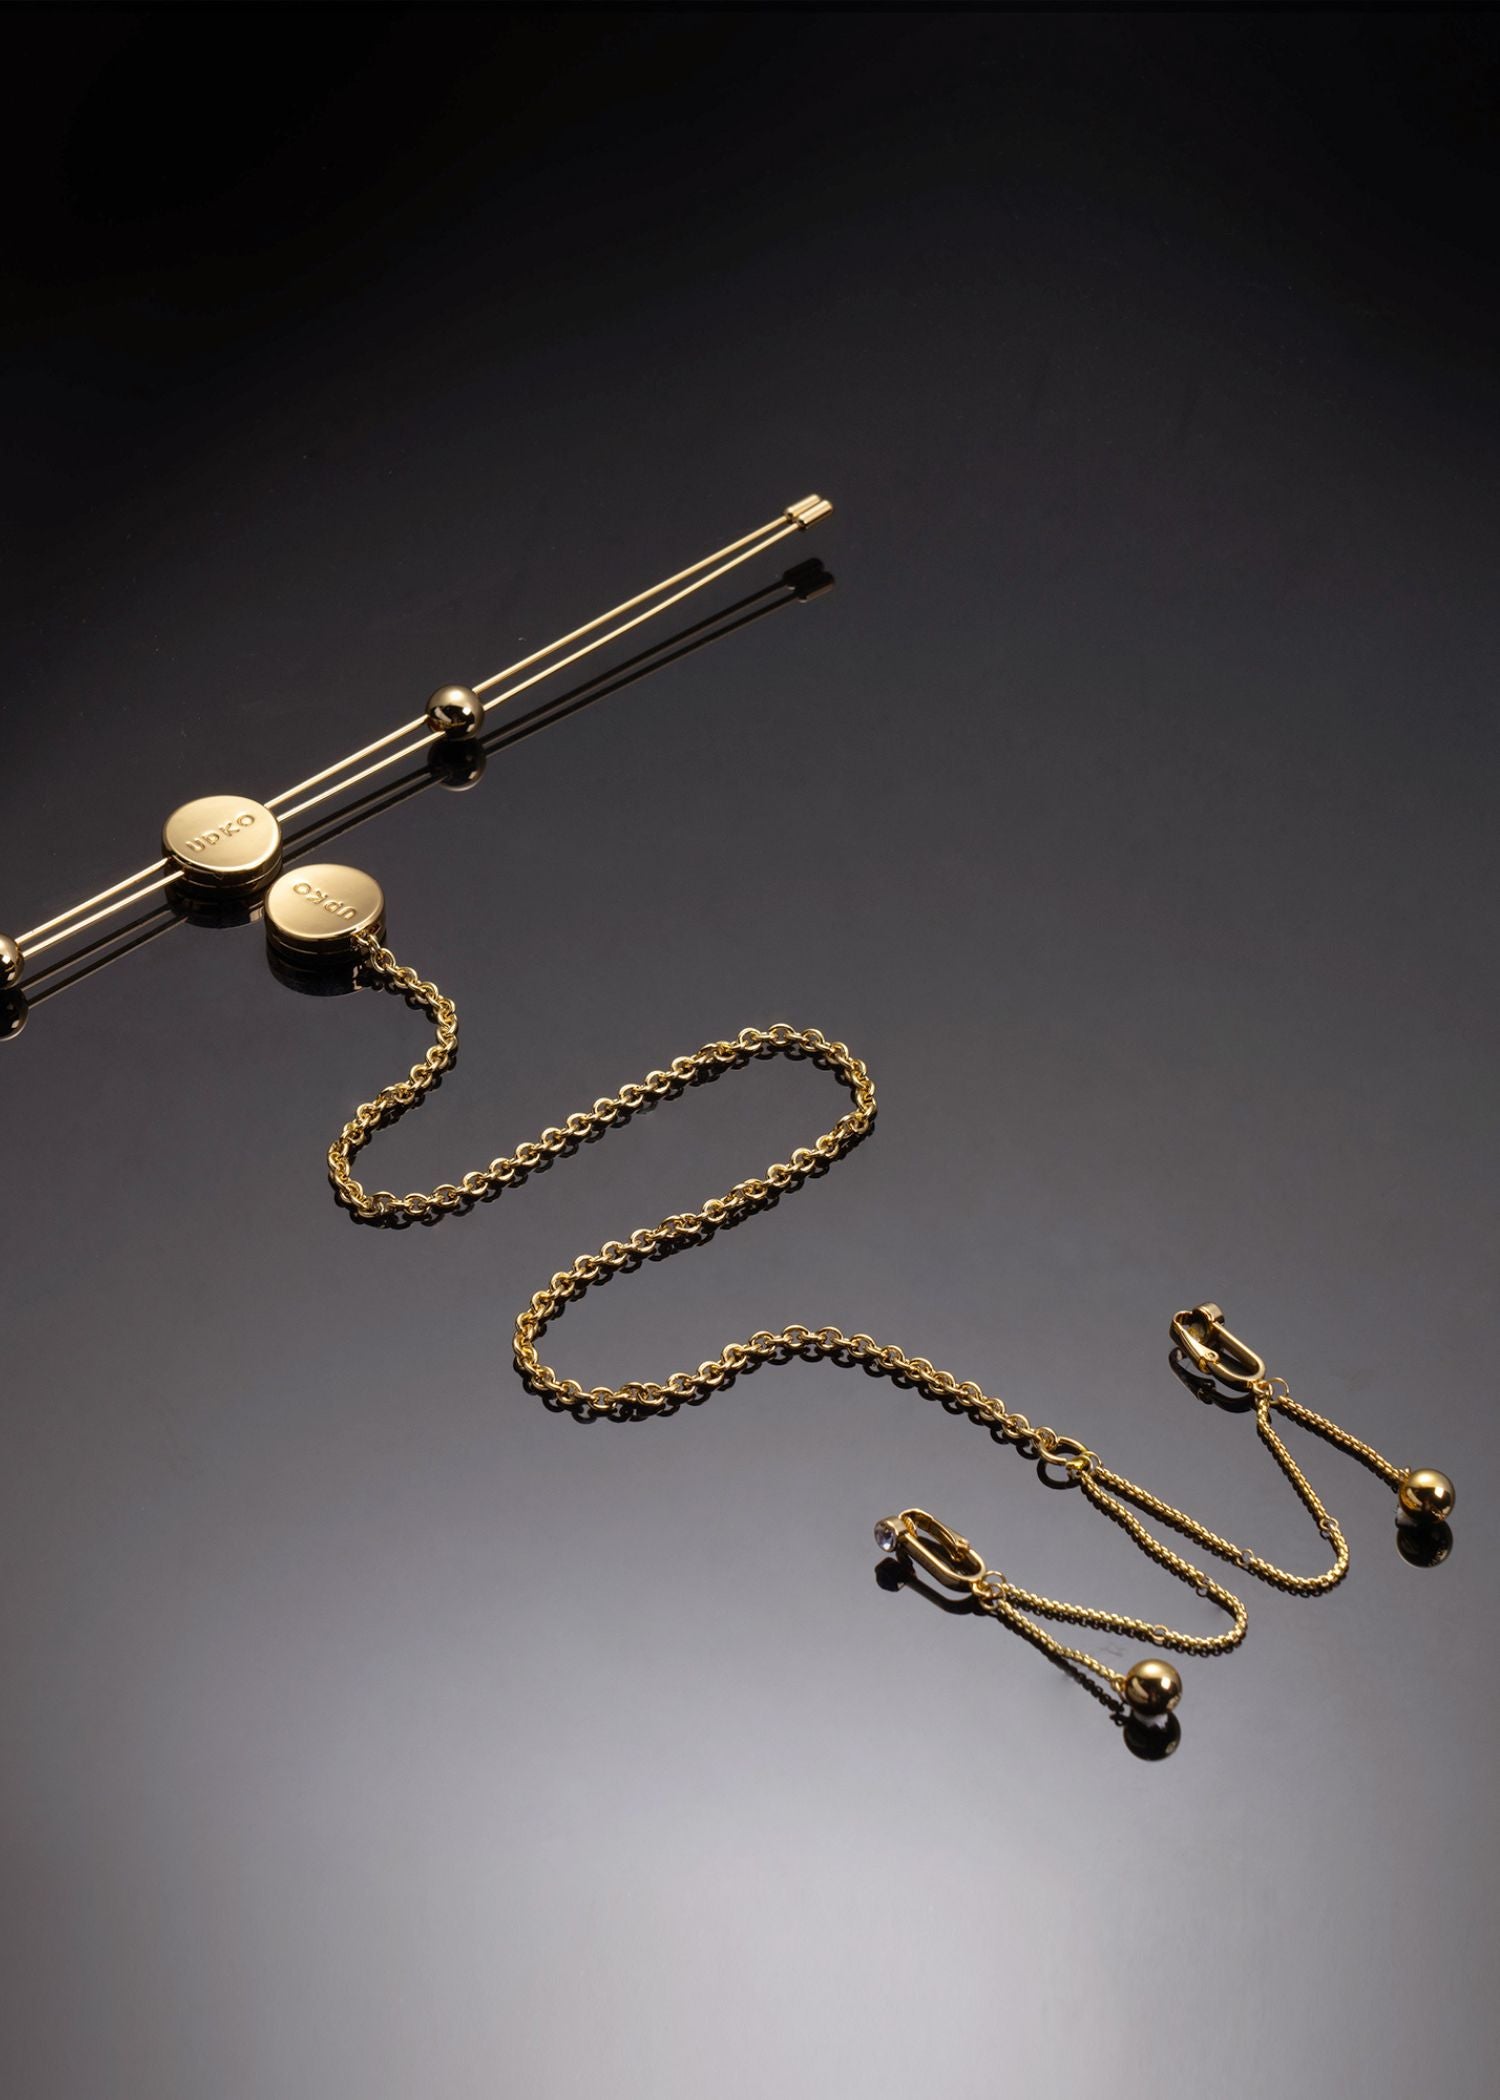 UPKO Double Bar Nipple Clamps & Clitoral Accessories Set (Gold) | Avec Amour Lingerie